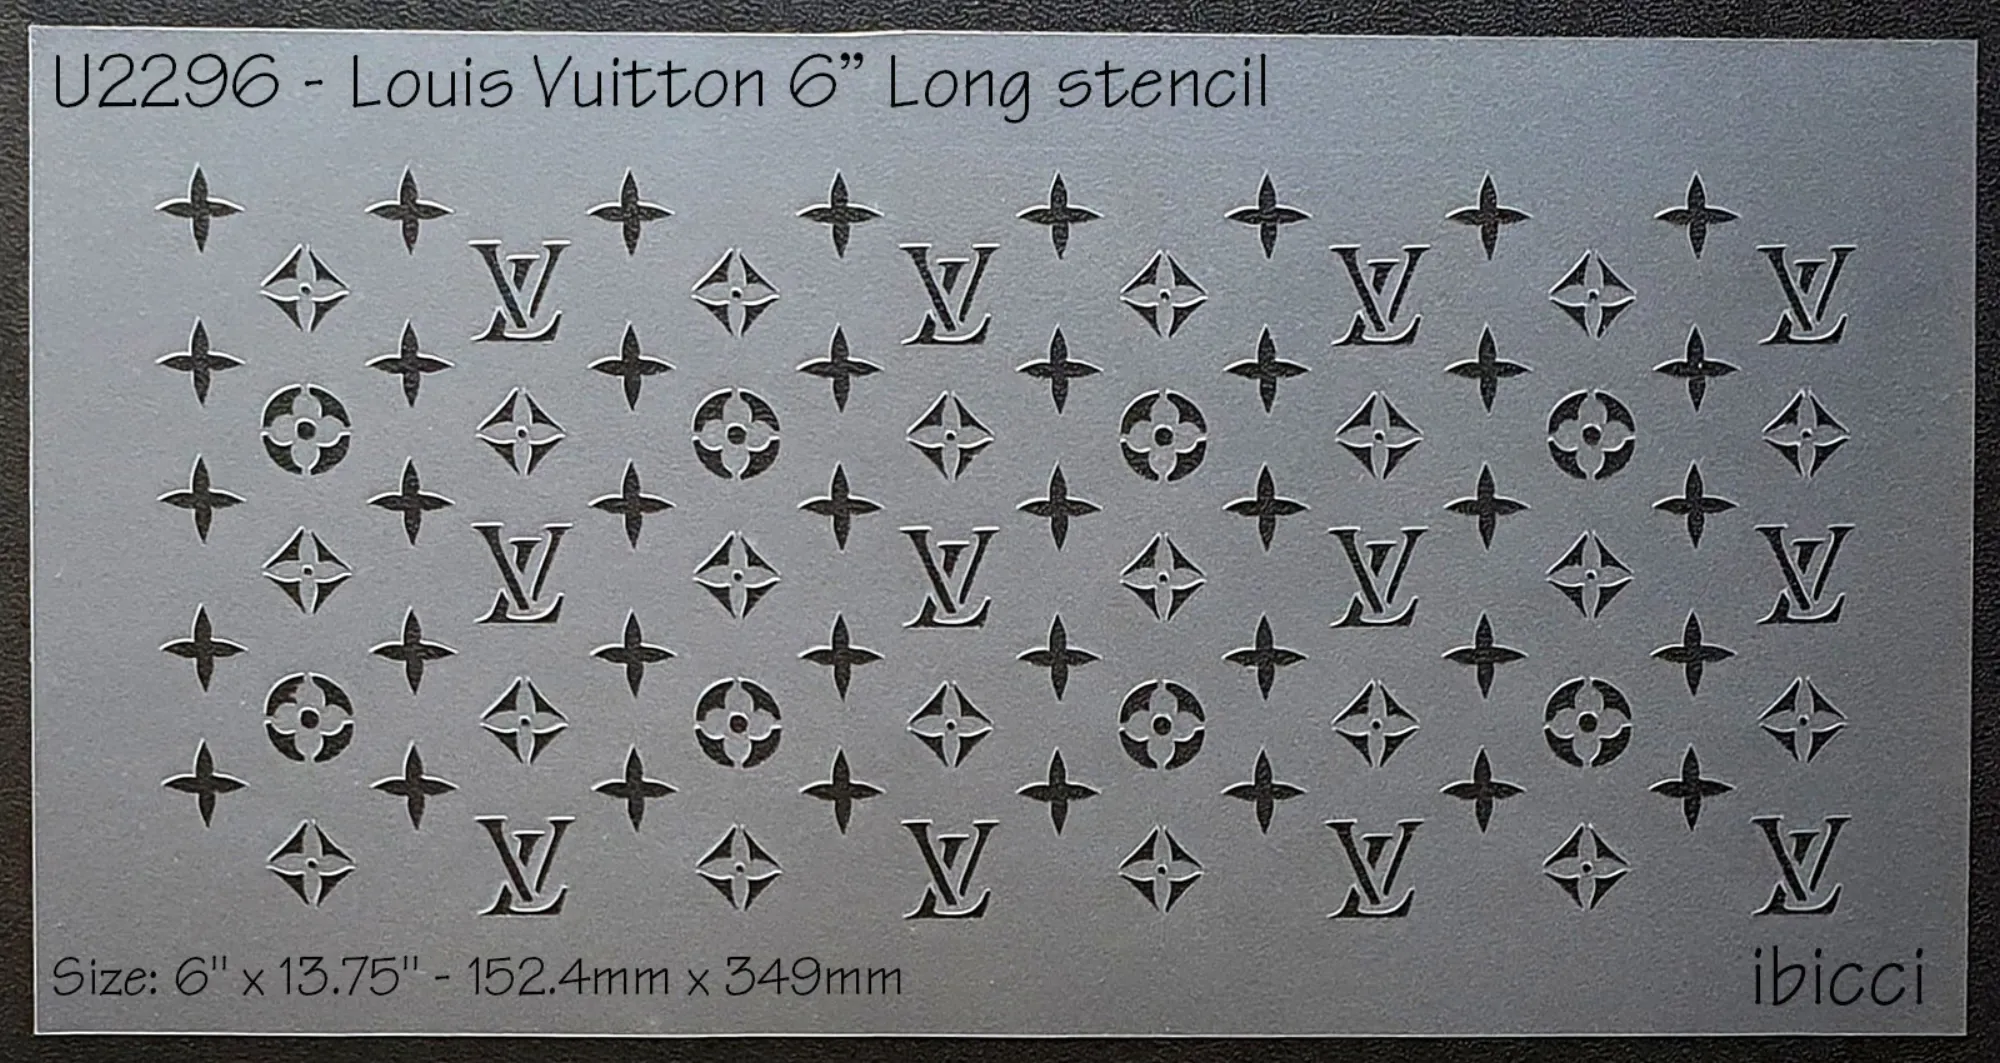 ibicci Louis Vuitton Cake Panel stencil (the original stencil)